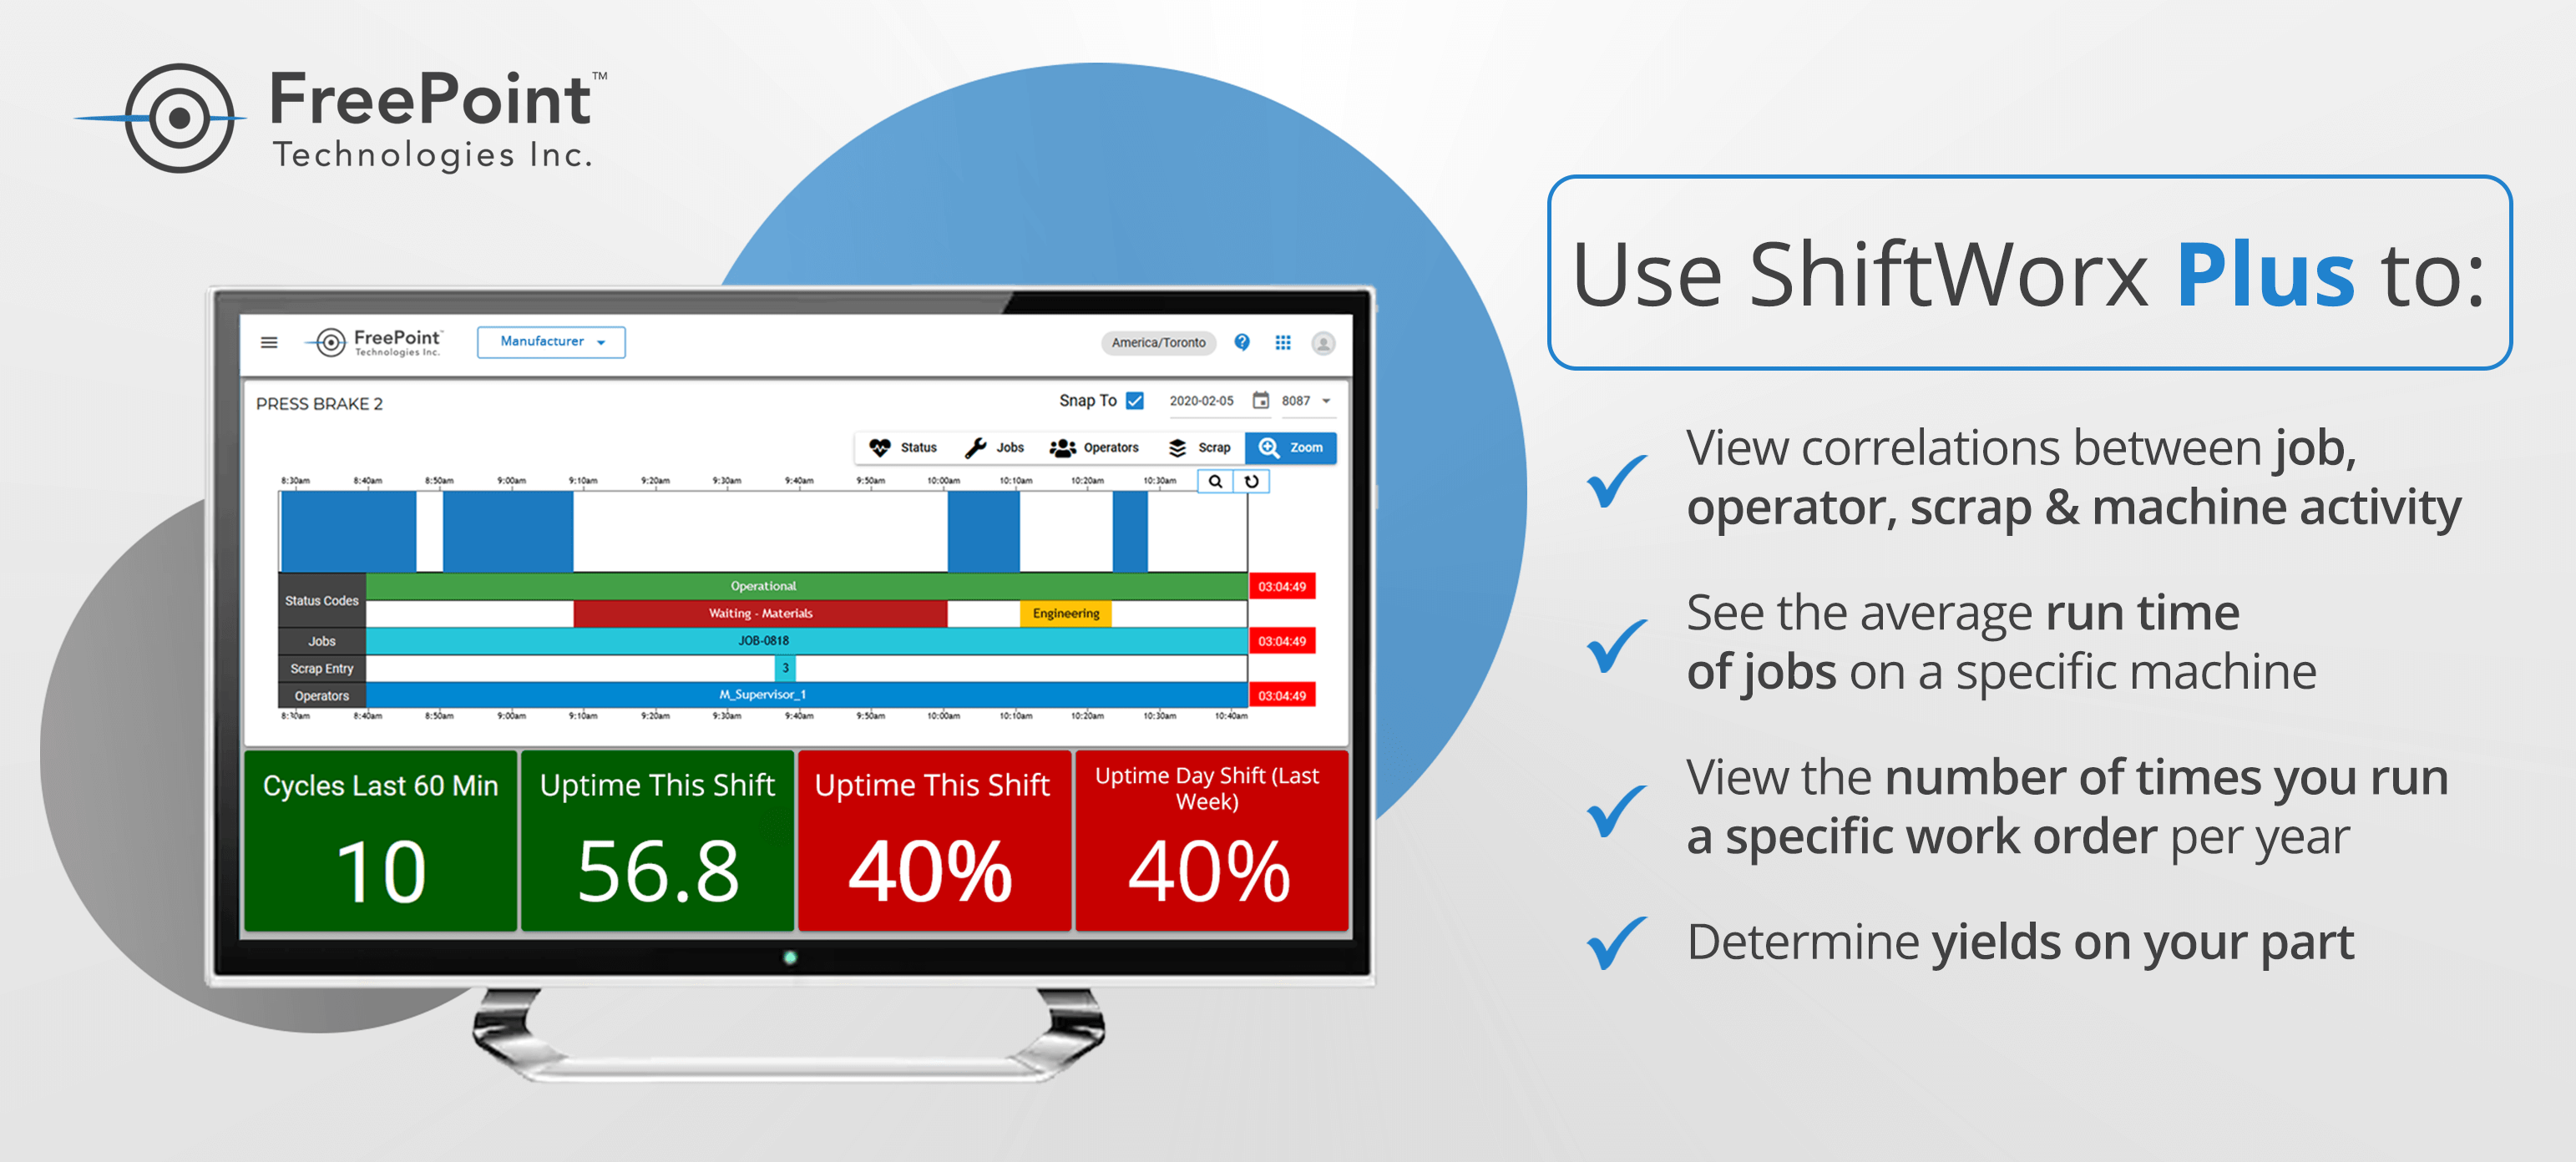 ShiftWorx Plus Benefits